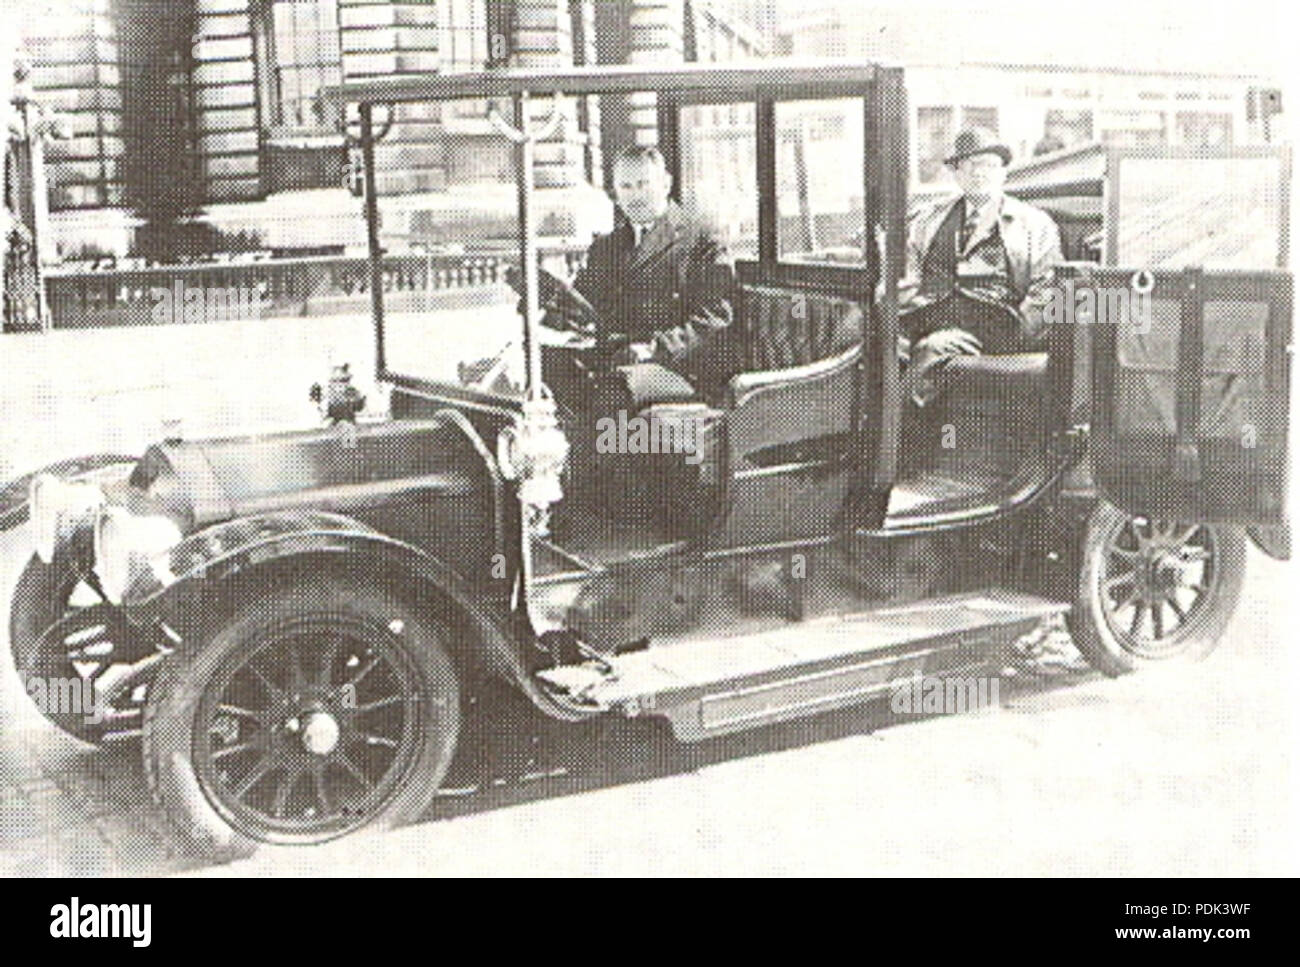 225 MHV Wolsleley 16-20 1910 Stock Photo